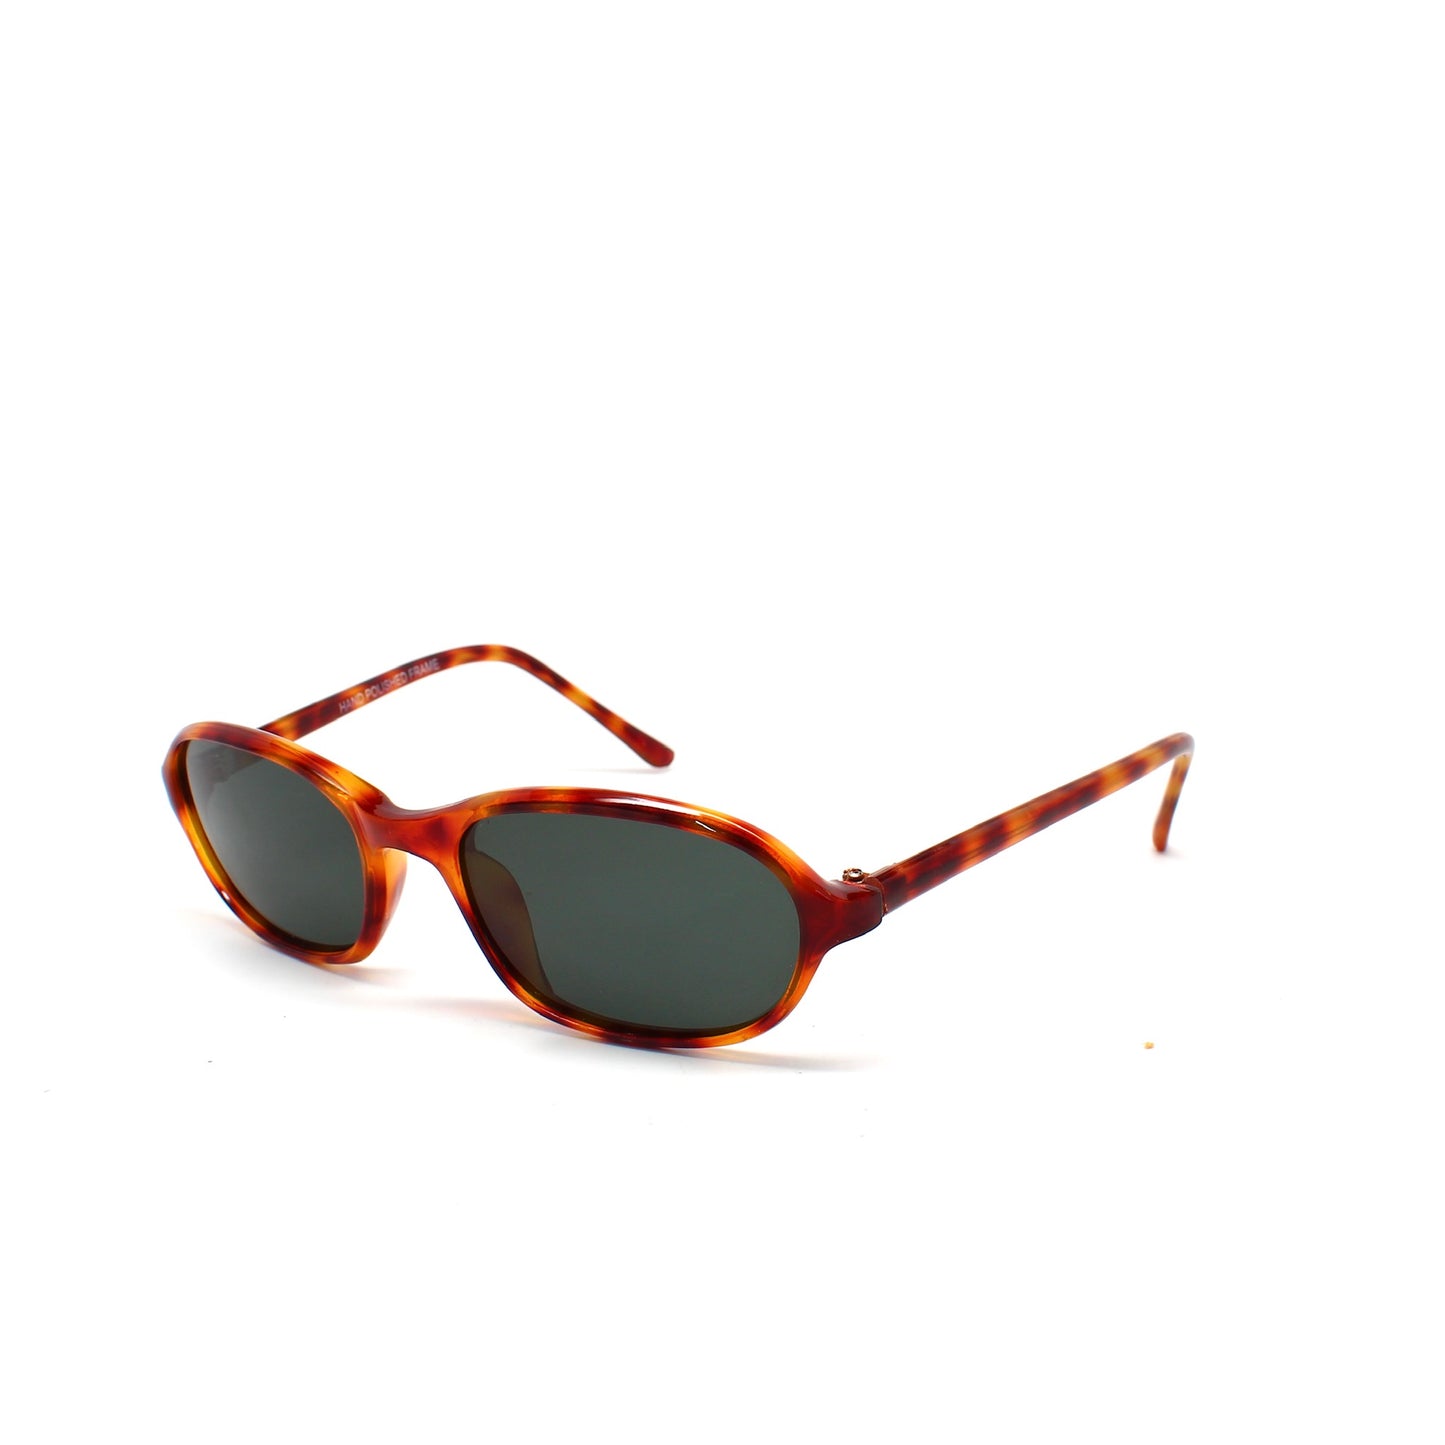 Vintage Standard Size 90s Deadstock Oval Frame Sunglasses - Brown